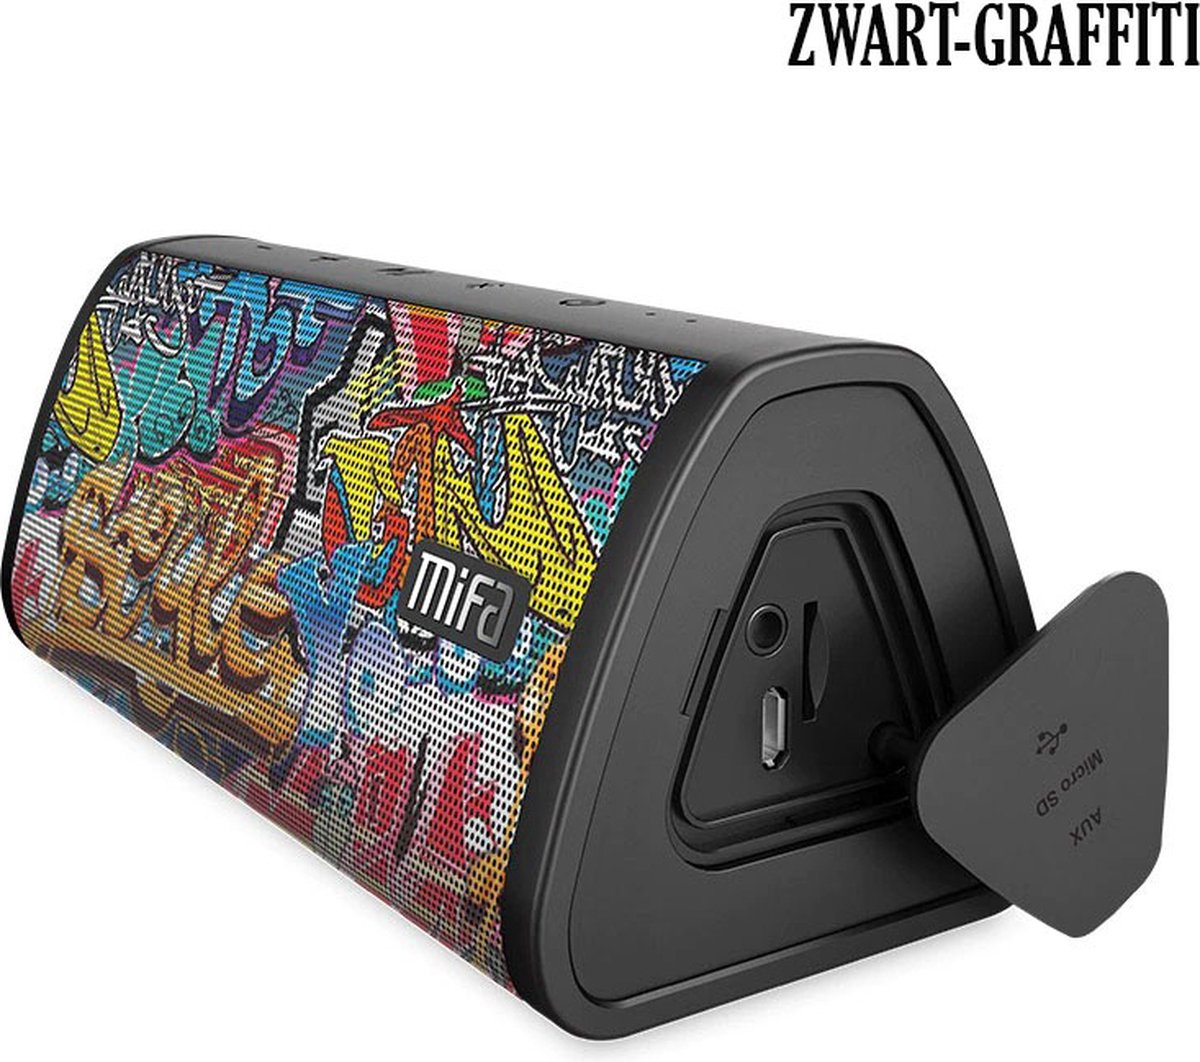 Speakers - Draadloze Speakersmet Bluetooth - Party Speaker Bluetooth - draadloze box - draadloze speakers usb - Waterdichte - Luidspreker voor Binnen en Buiten Gebruik - Geluidssysteem 10W Stereo - Muziek Surround - Rood Graffiti/Zwar/Zwart Graffiti